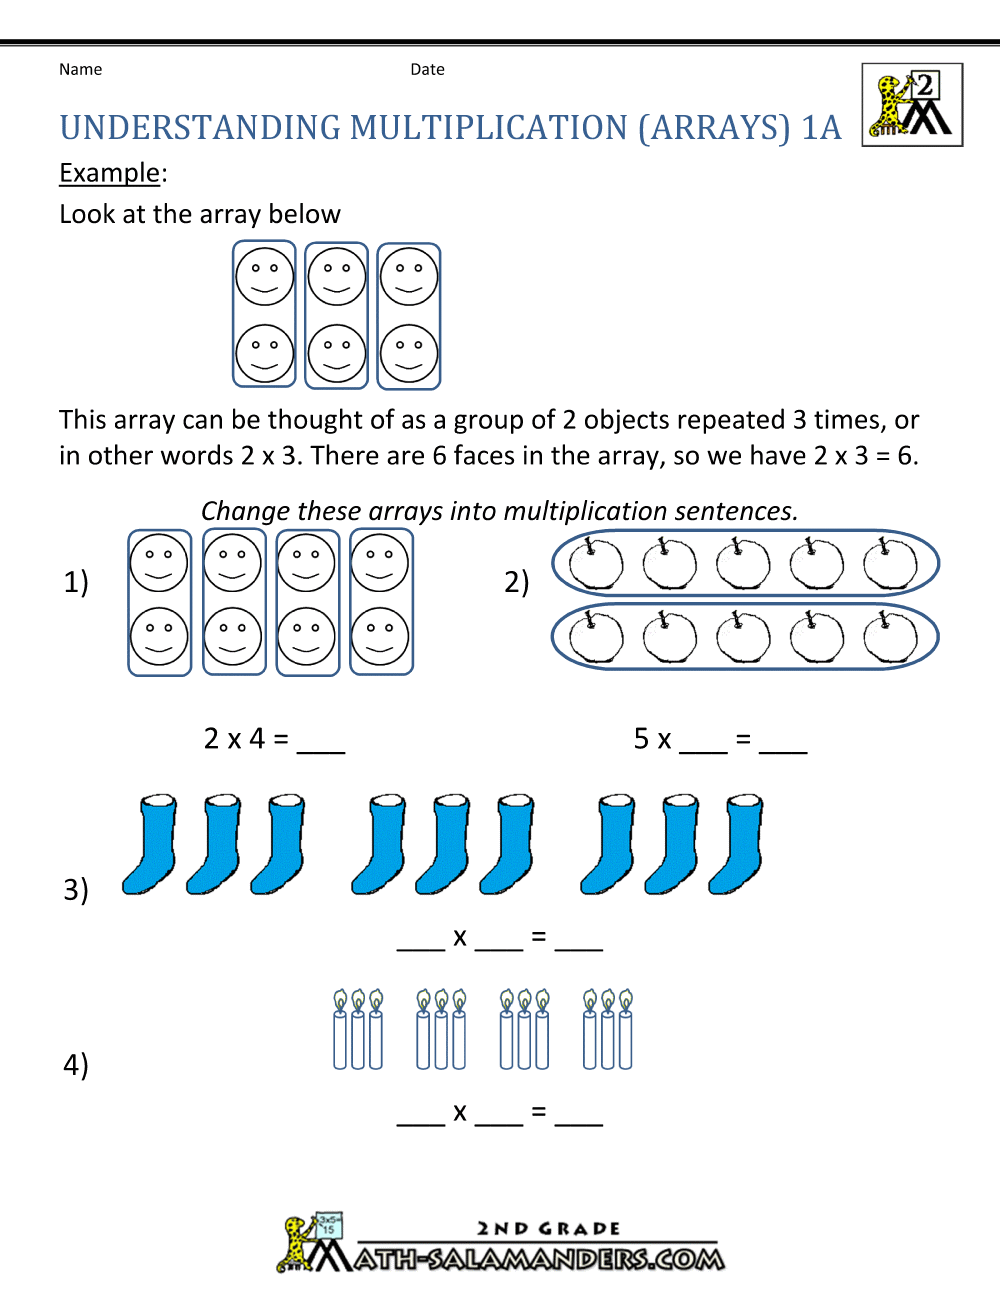 learning-to-multiply-multiplication-arrays-1-tmk-education